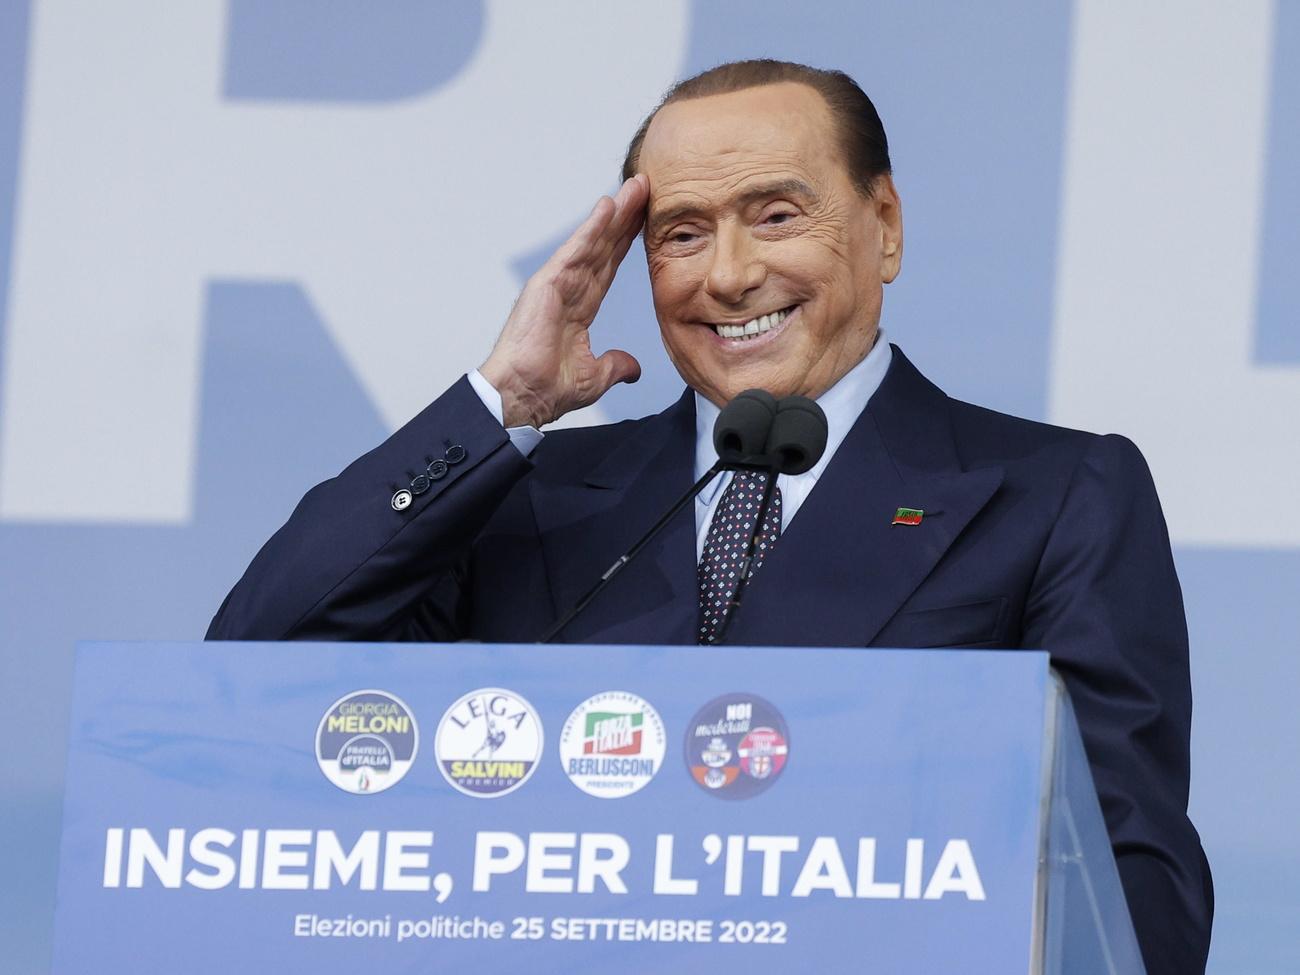 Silvio Berlusconi en pleine campagne électorale le 22 septembre 2022 à Rome. [Keystone - EPA/GIUSEPPE LAMI]